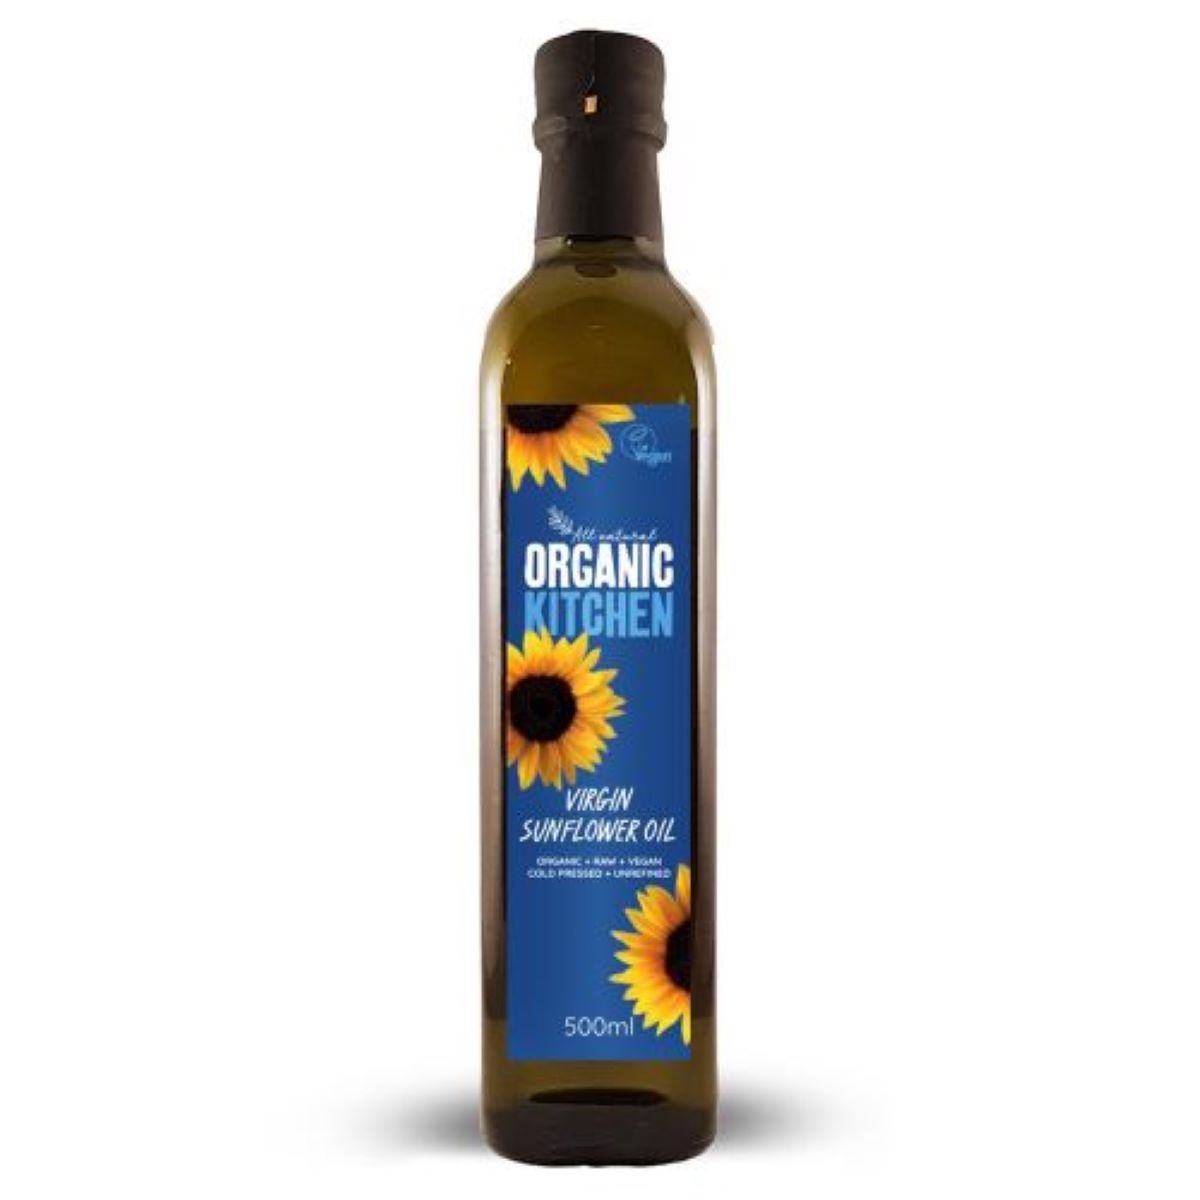 Organic Kitchen Virgin Sunflower Oil 500ml